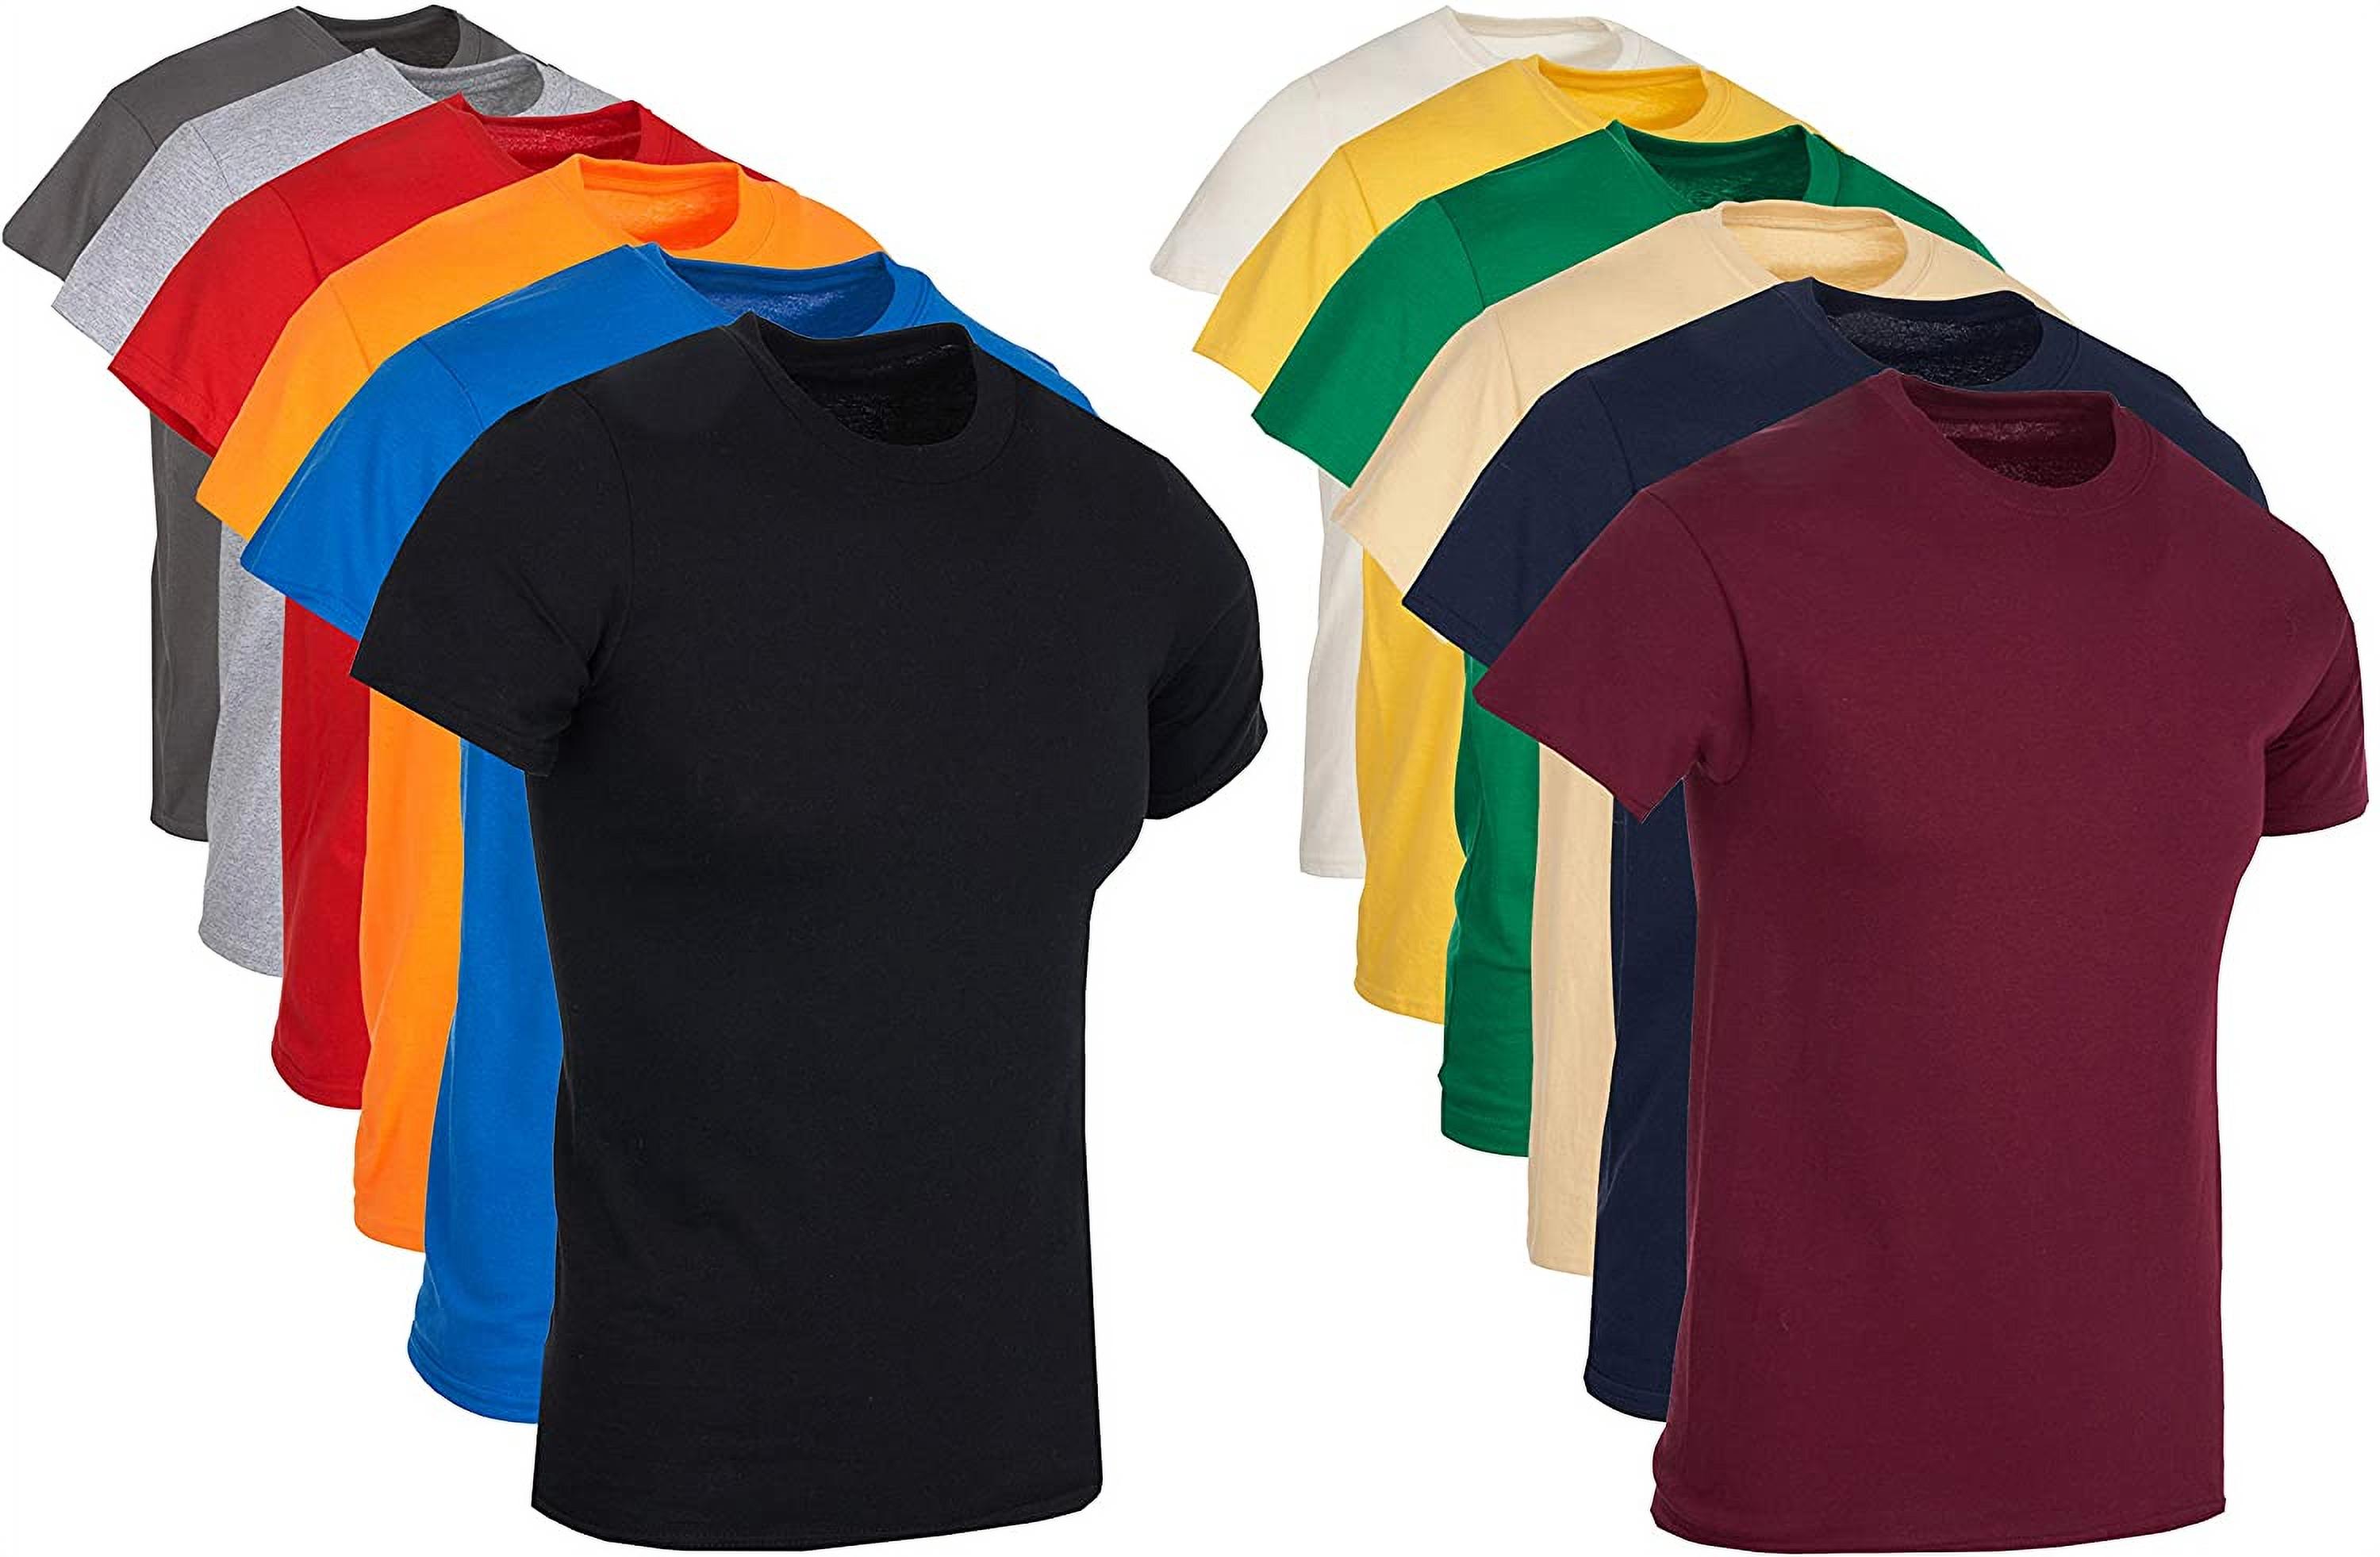 Men's Cotton Crew Neck Short Sleeve T-Shirts, Bulk Tshirt Color Mix - image 1 of 3